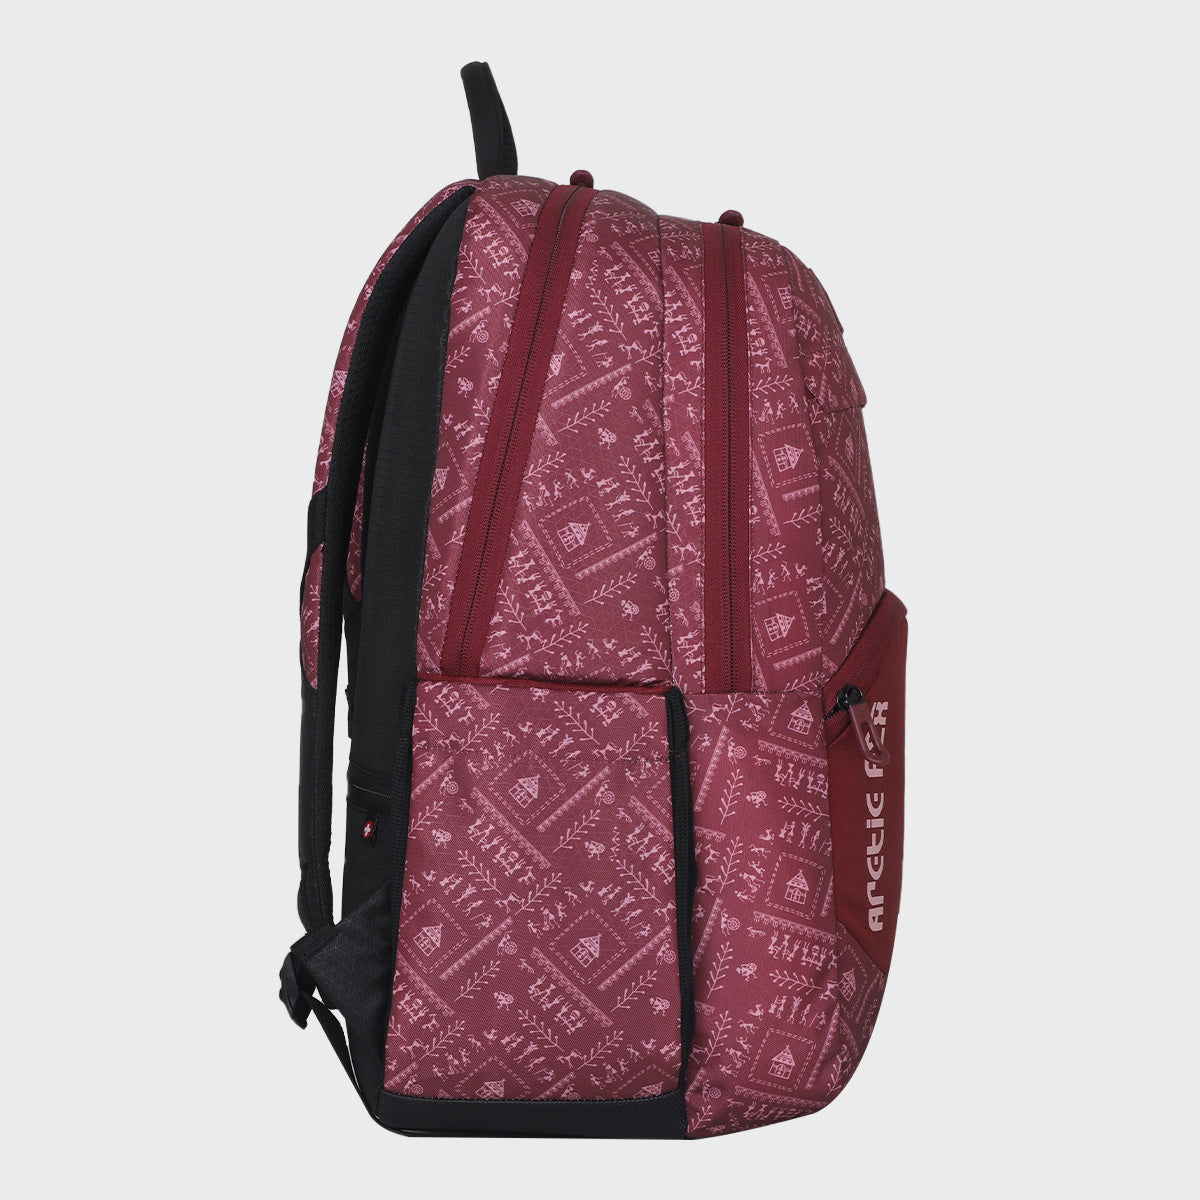 Arctic Fox 15.6" Laptop Backpack For Girls Warli Tawny Port